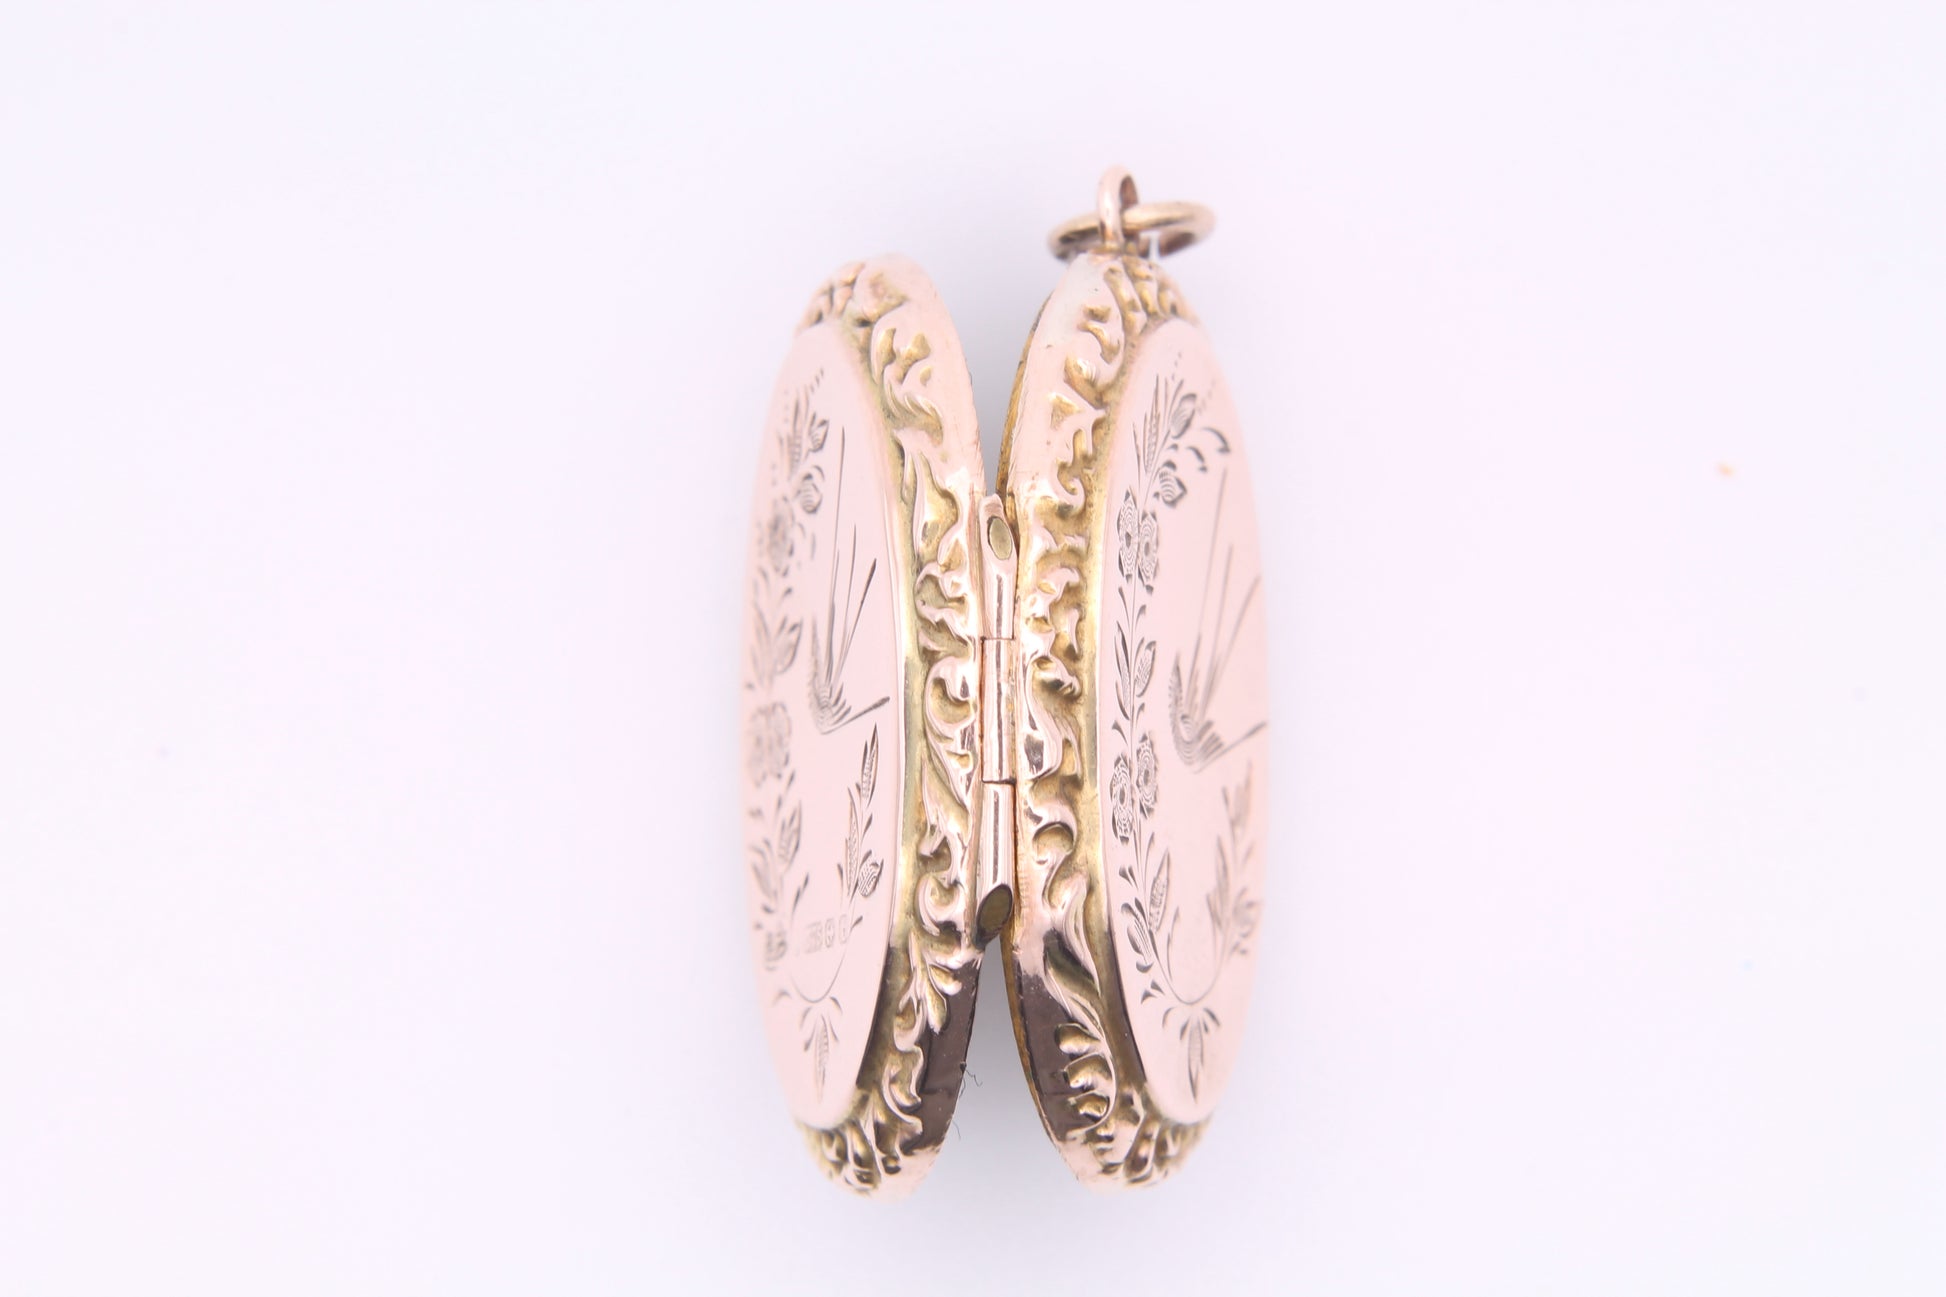 edwardian-9ct-gold-decorative-oval-swallow-locket